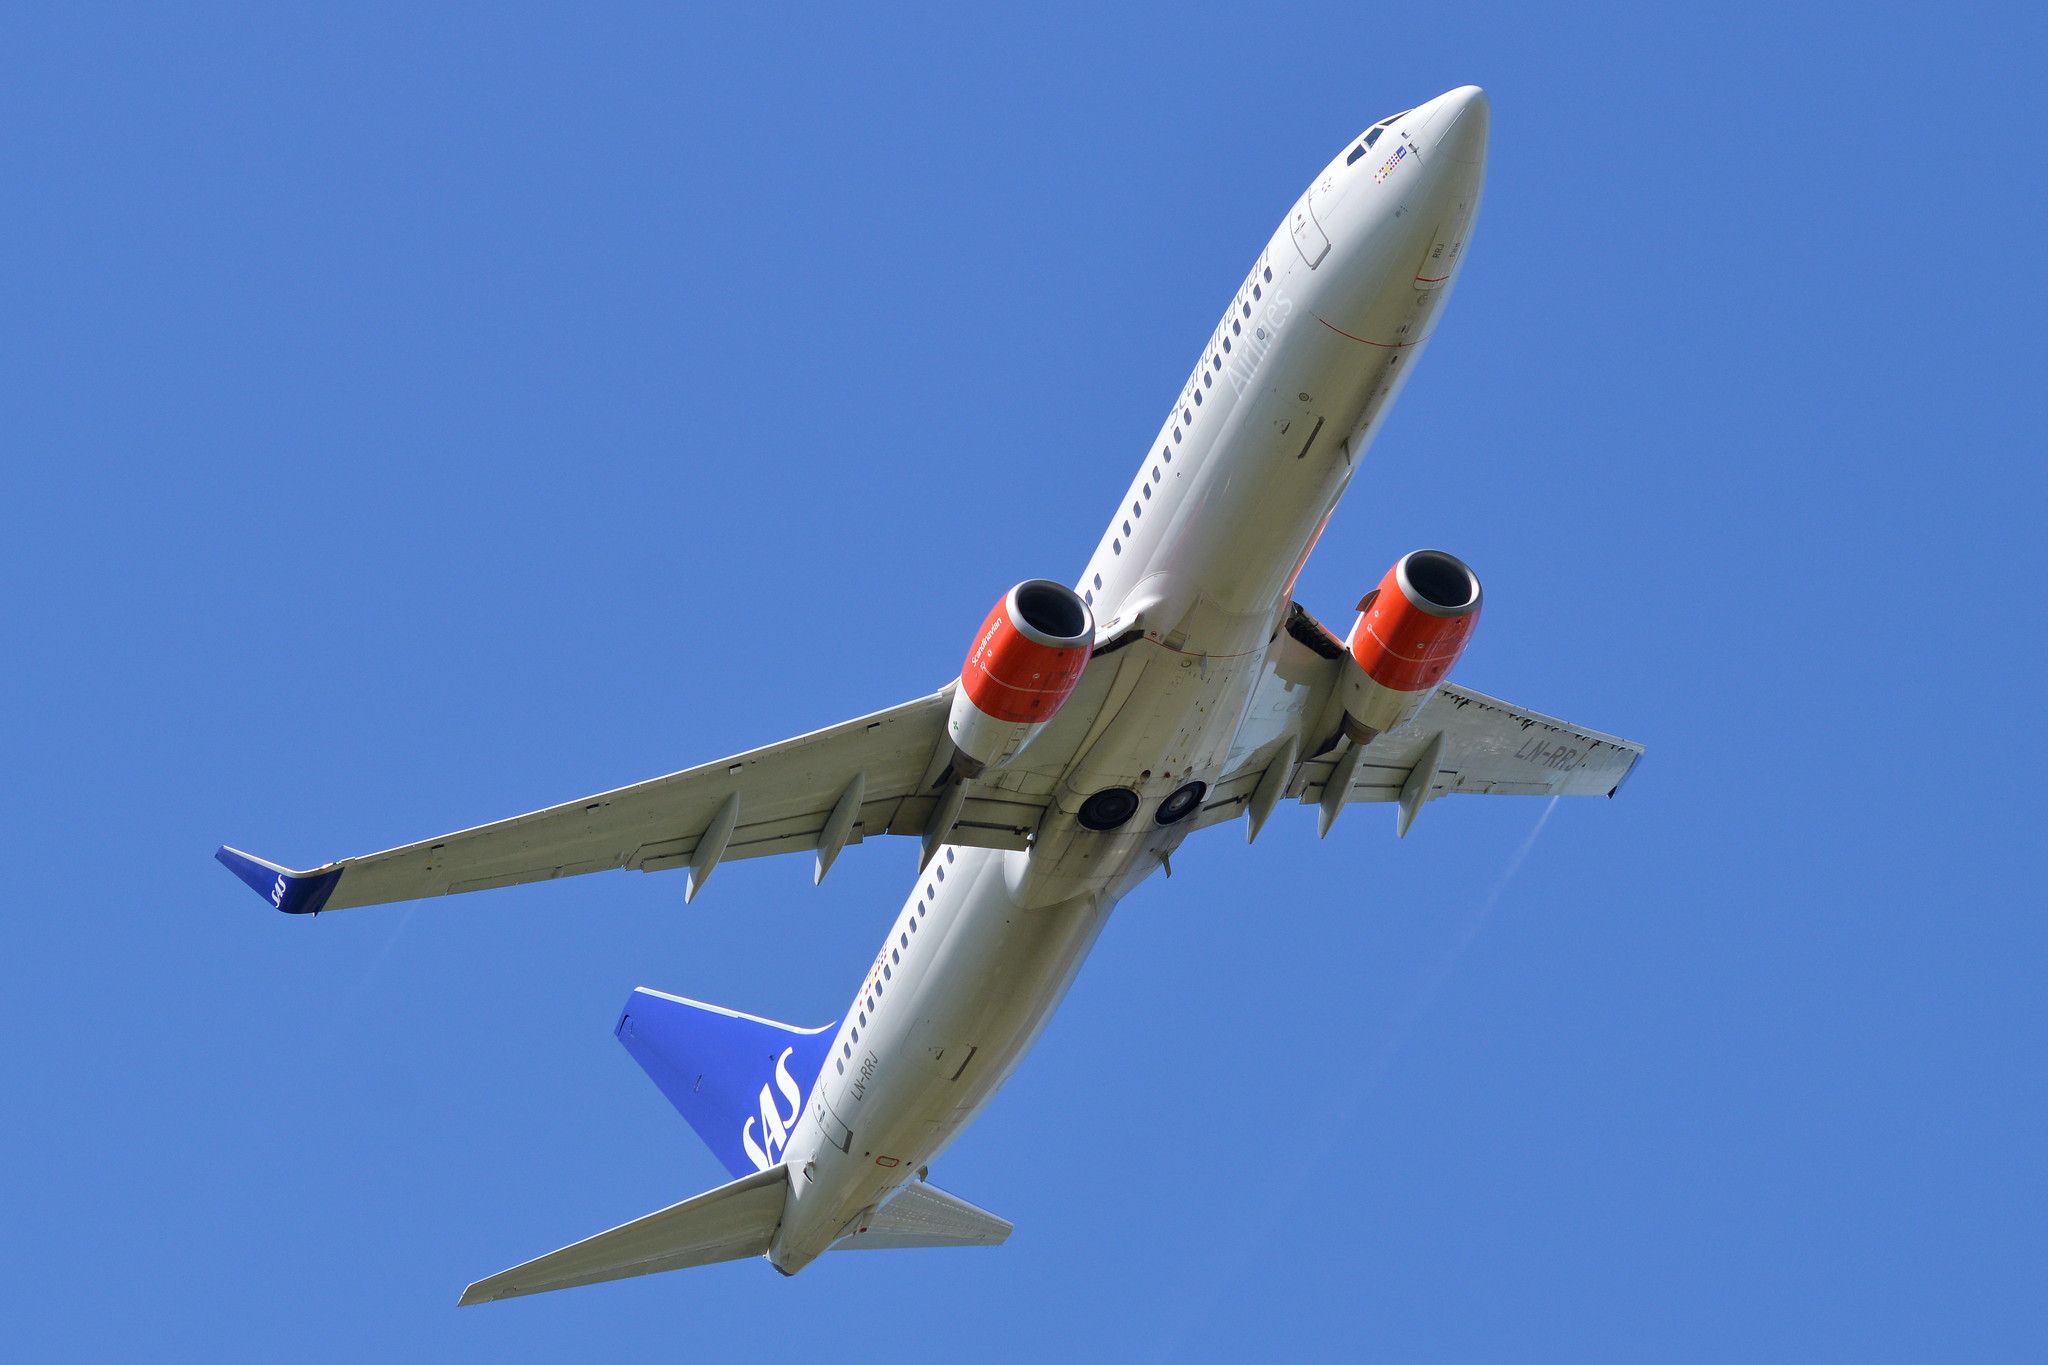 Boeing 737-883 ‘LN-RRJ’ SAS Scandinavian Airline System flying gear up in the blue yonder